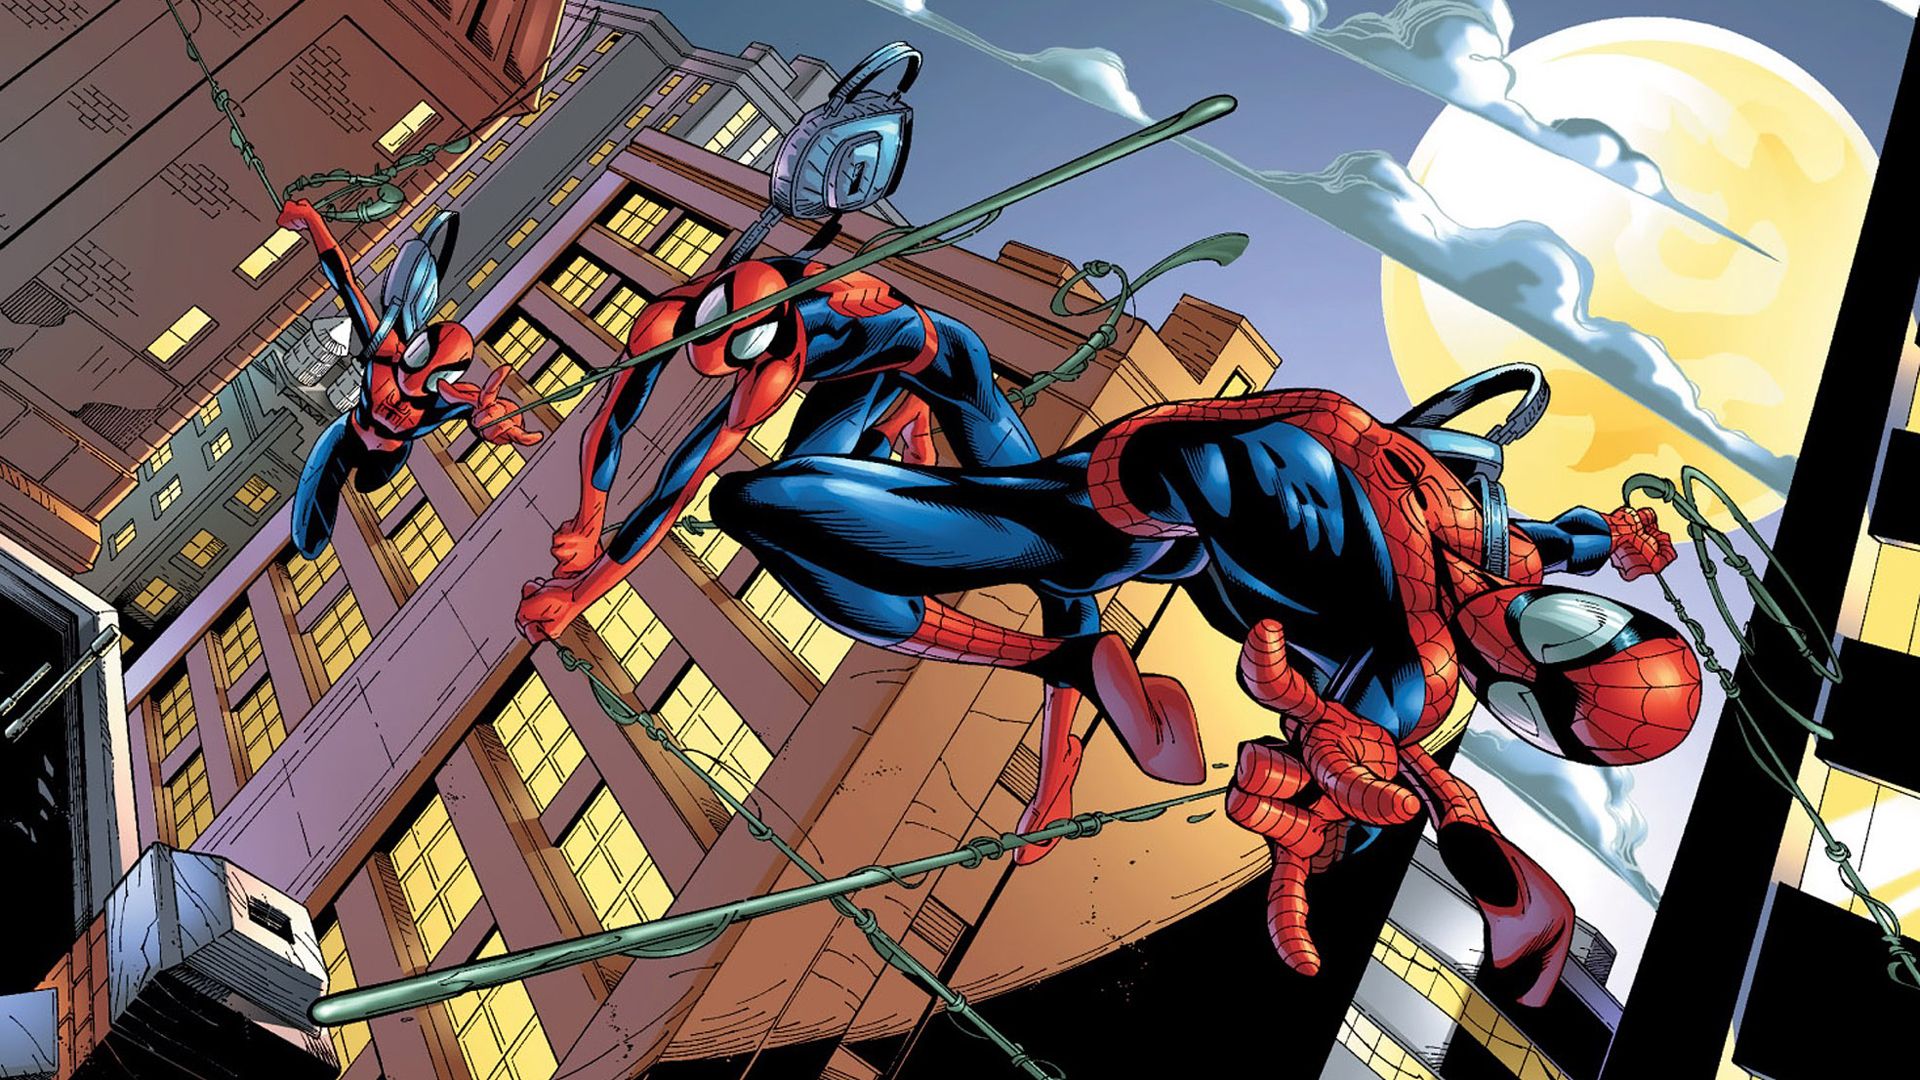 Spiderman comics spider-man superhero wallpaper | 1920x1080 ...